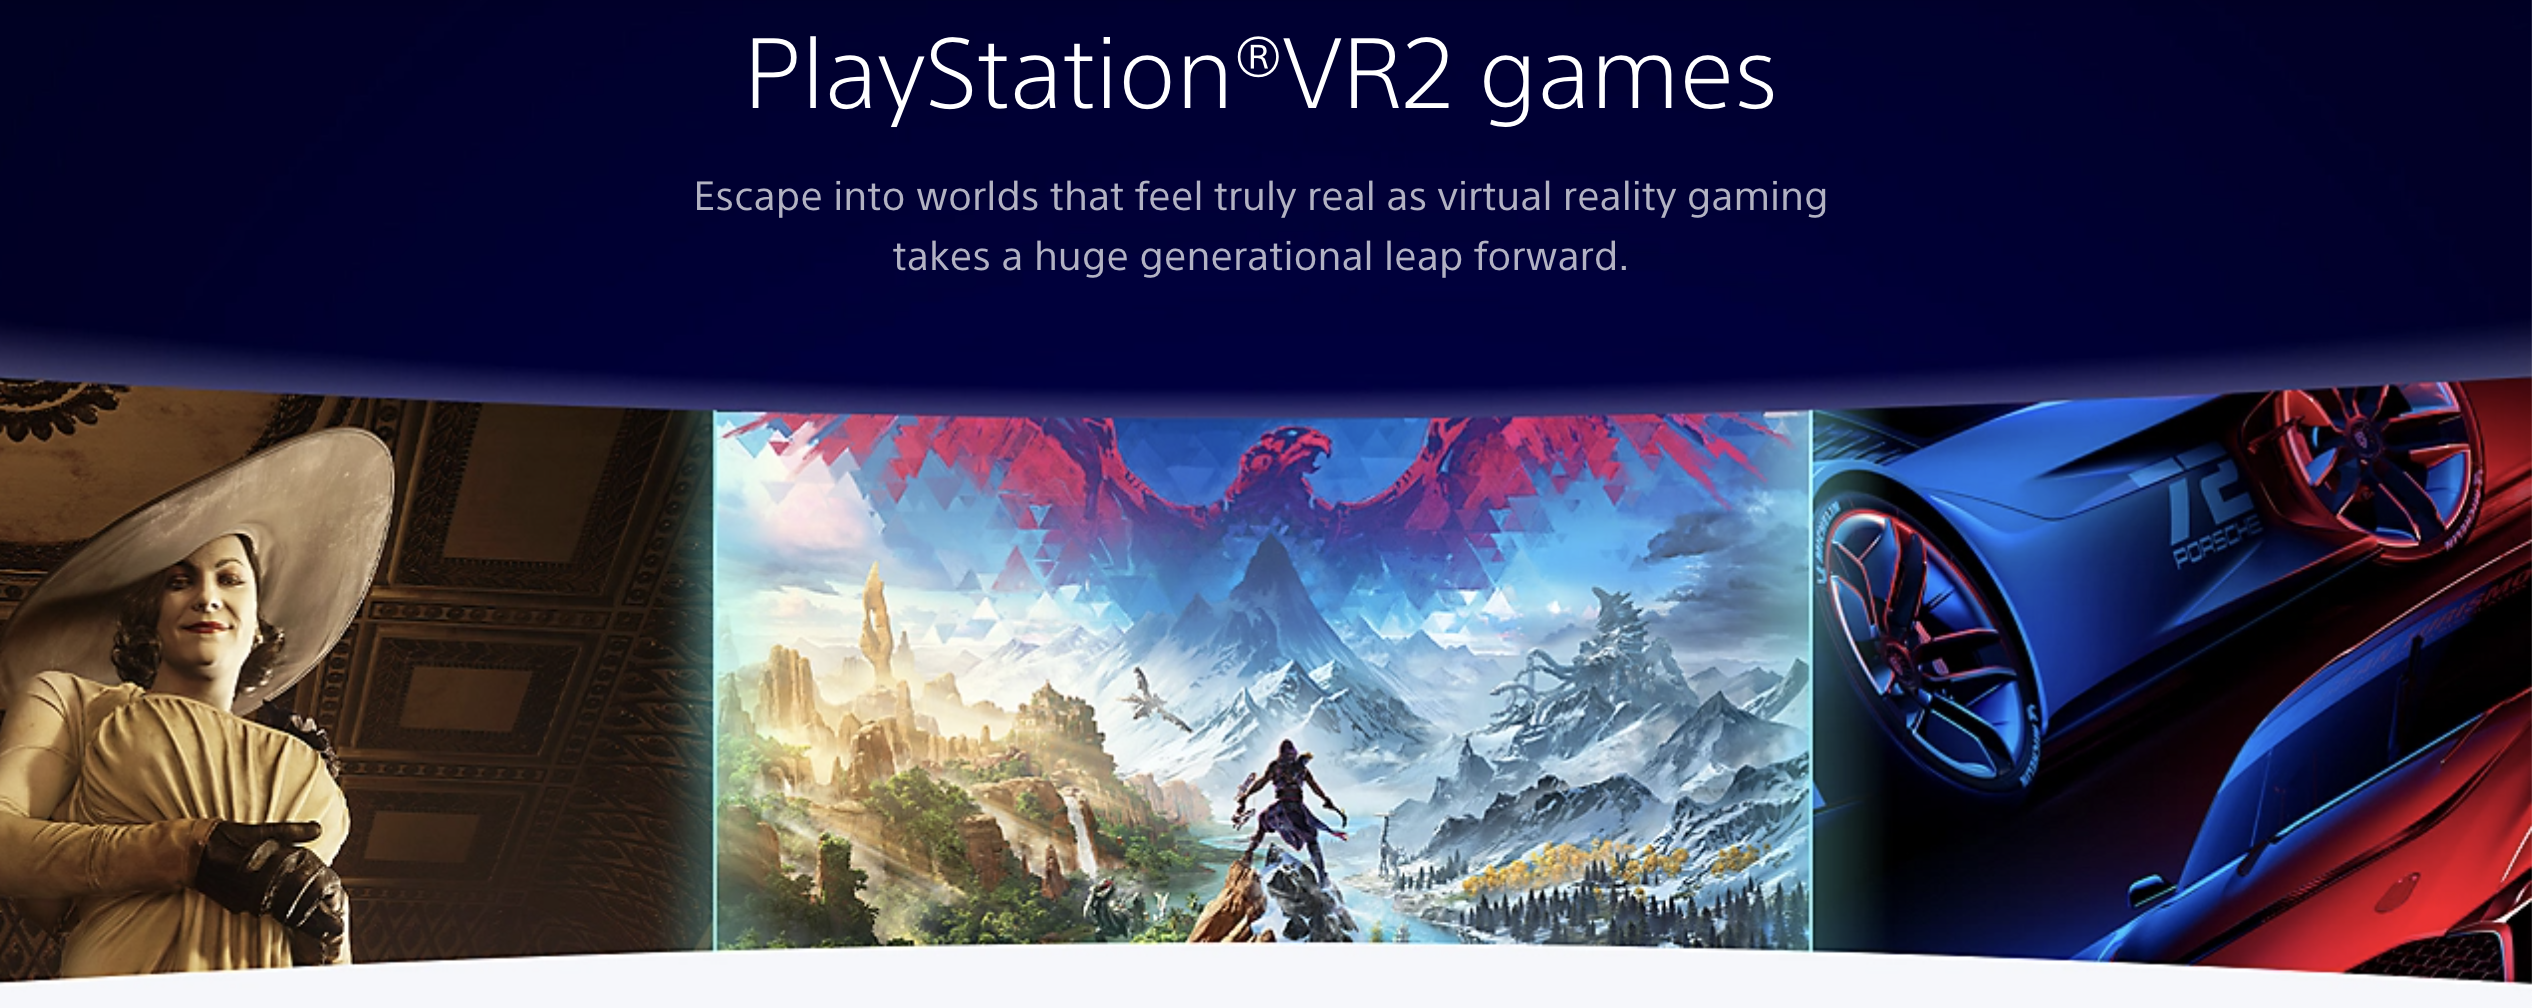 psvr2 games | Horizon Call of the Mountain | รีวิว PlayStation VR2 - ประสบการณ์ใหม่ที่ยอดเยี่ยมของการเล่นเกม VR บน PlayStation 5